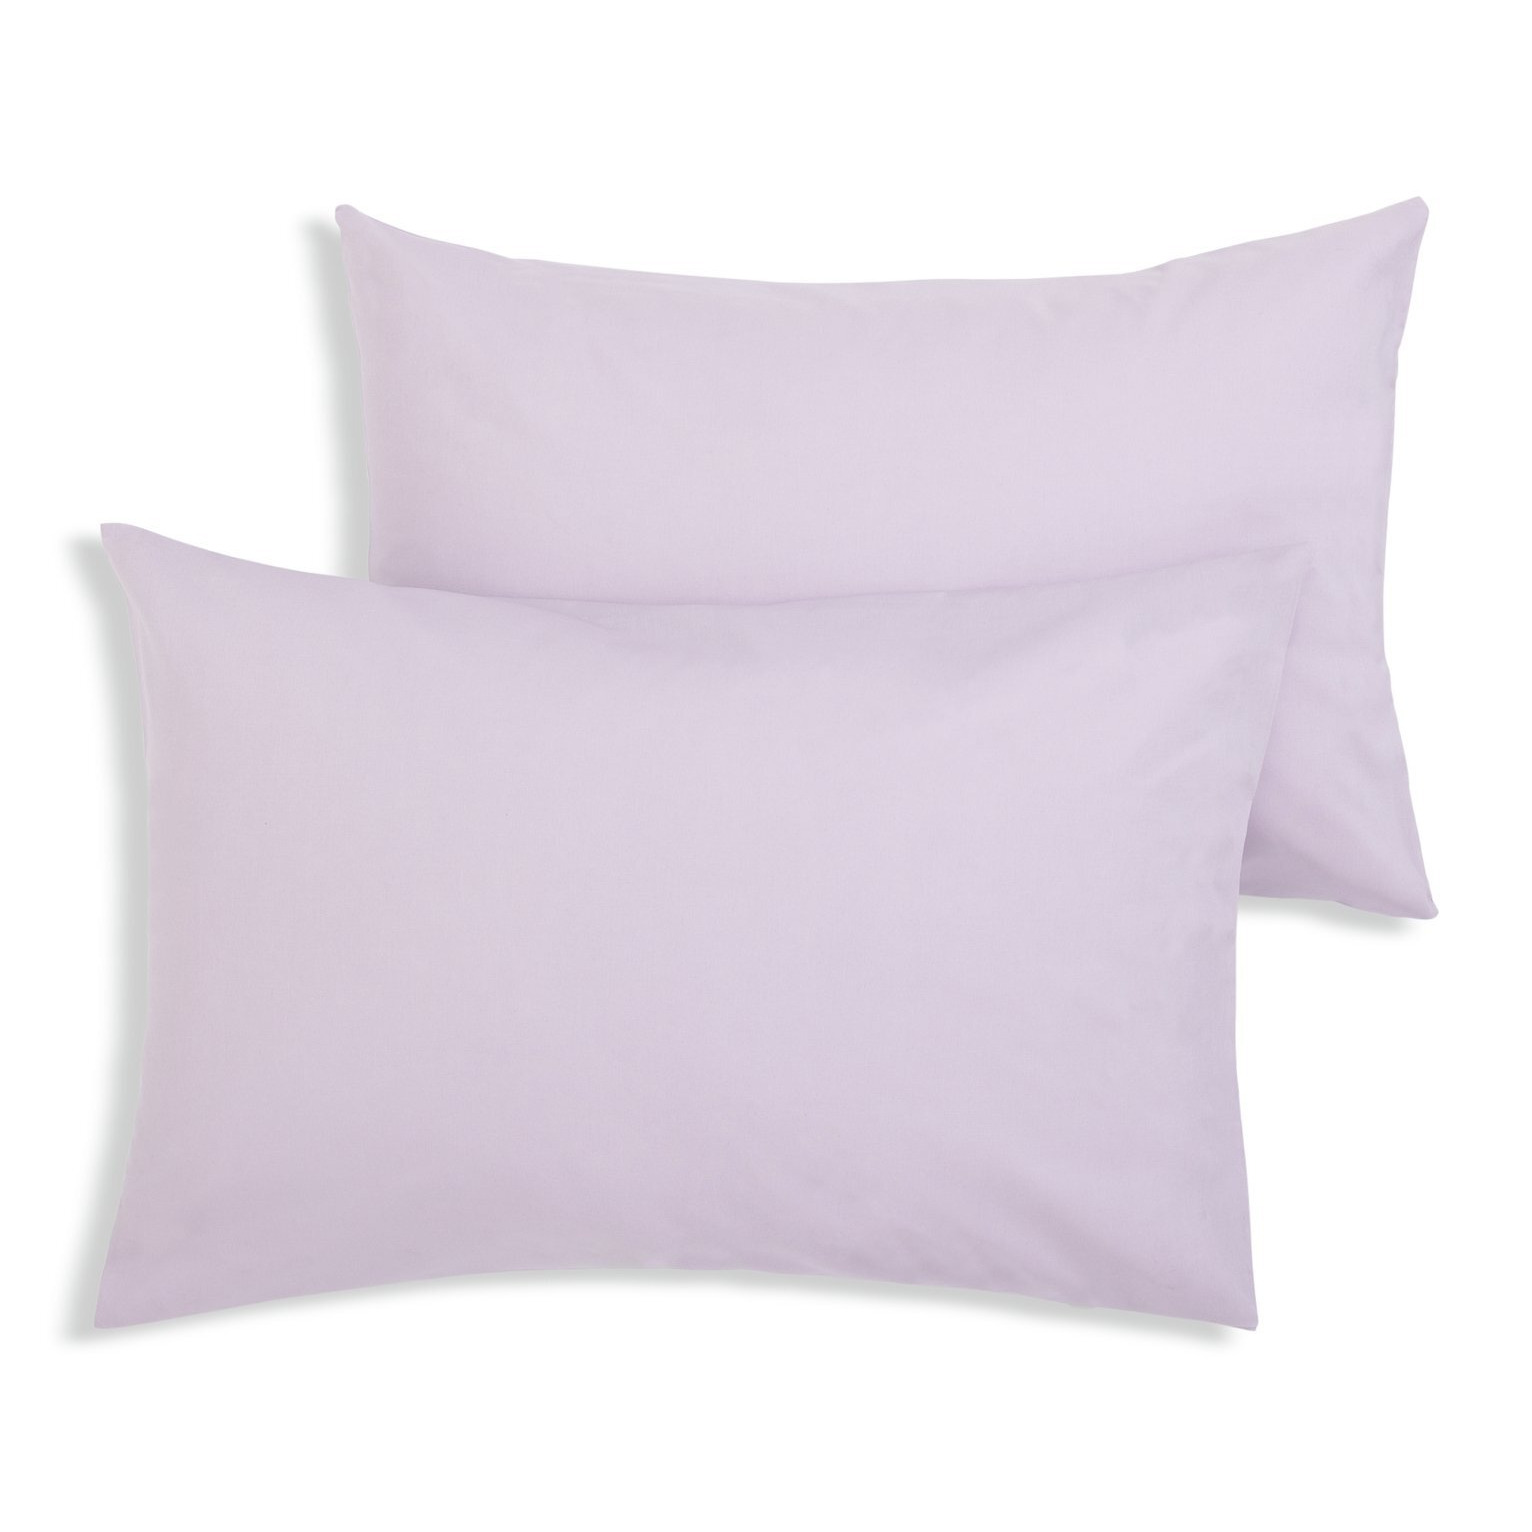 Habitat Polycotton Standard Pillowcase Pair -  Lilac - image 1